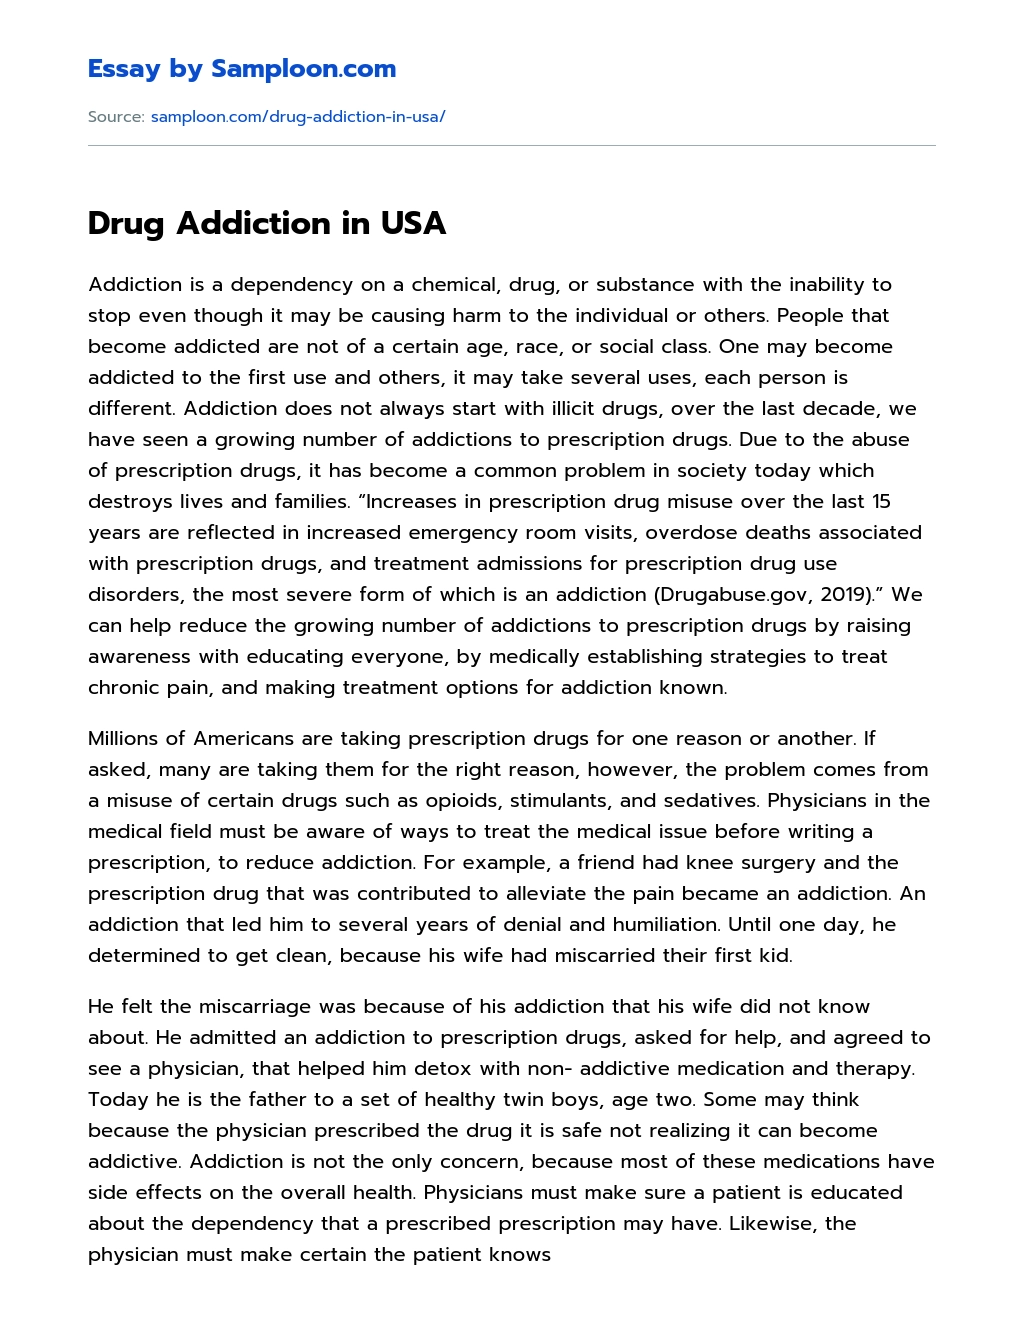 Drug Addiction in USA essay